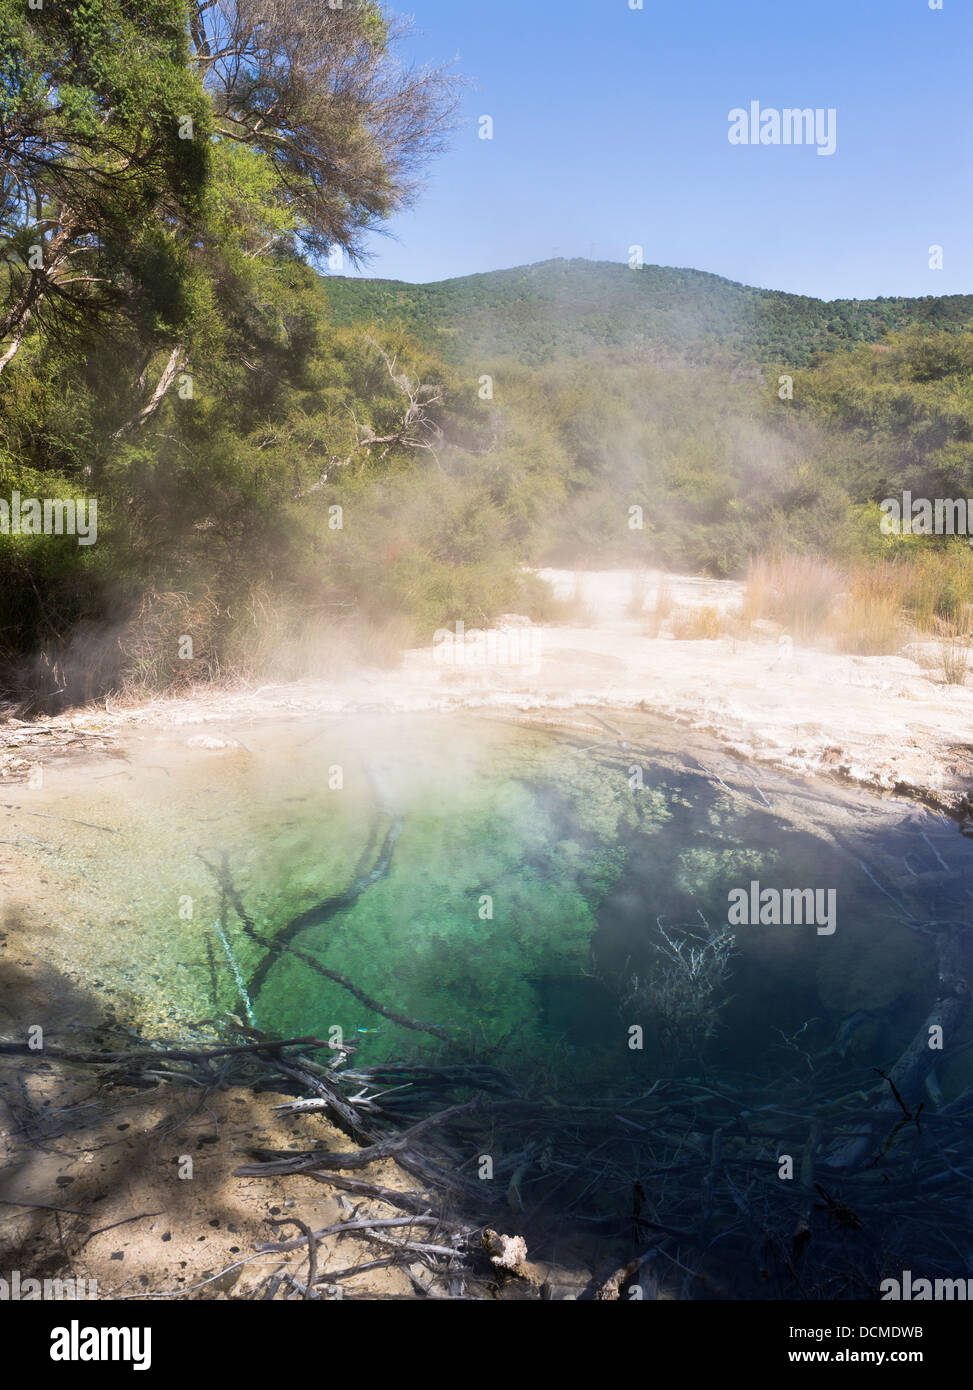 dh Tokaanu Thermal Walk TOKAANU NEW ZEALAND Recreation Reserve Thermal pool fumante acqua minerale calda sorgenti geotermiche Foto Stock